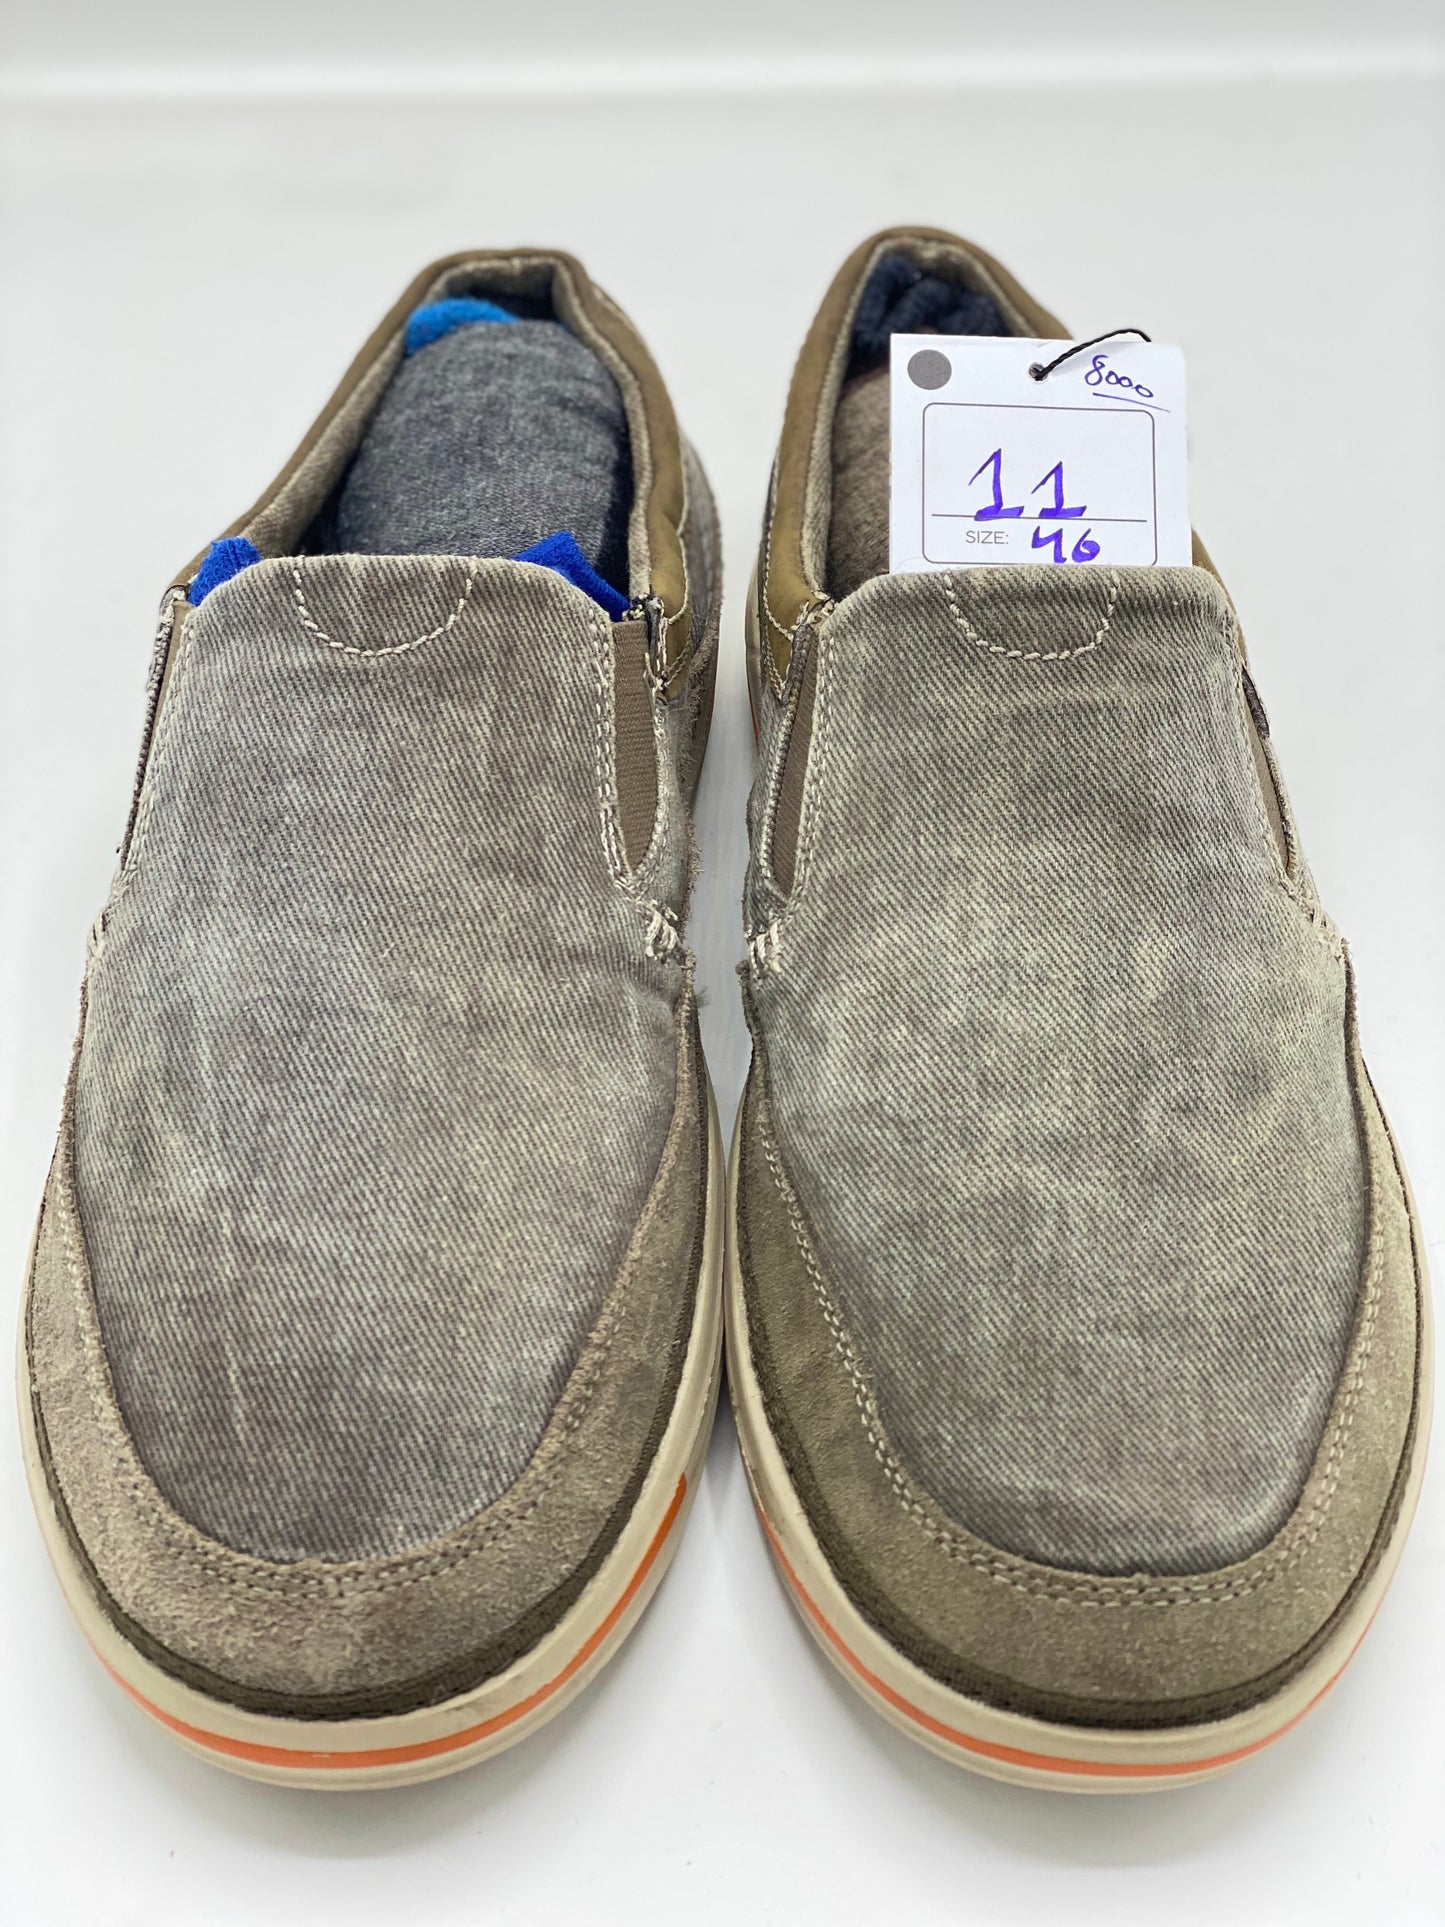 New Skechers 64355/GRY MensCasual Shoes Gray Memory Foam